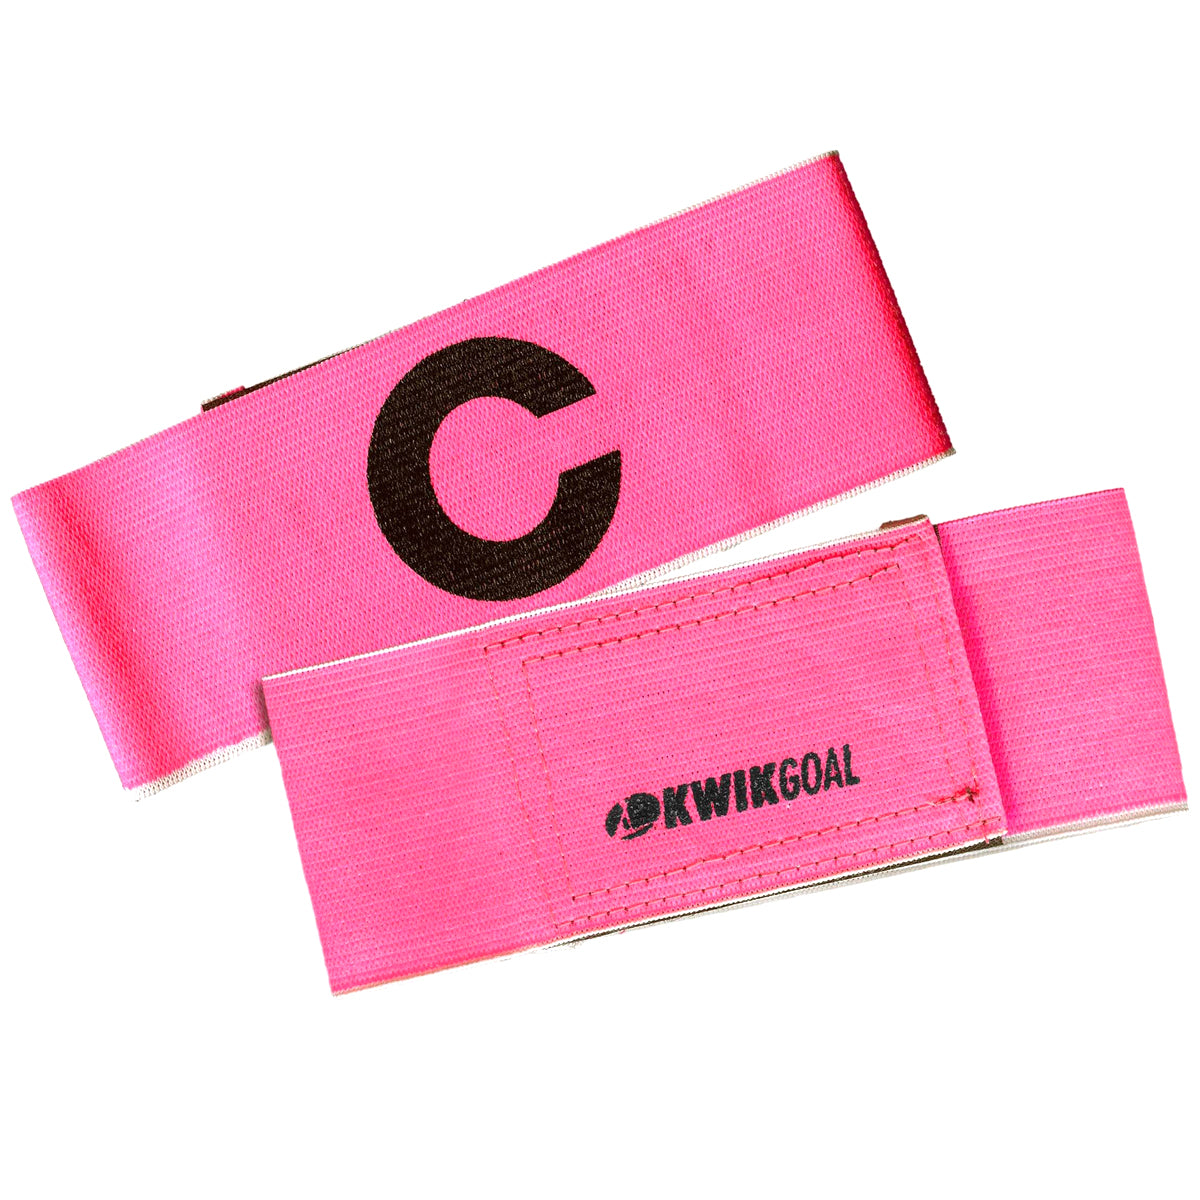 Kwikgoal Captain "C" Arm Bands | 19B12 Training equipment Kwikgoal High-Vis Pink 